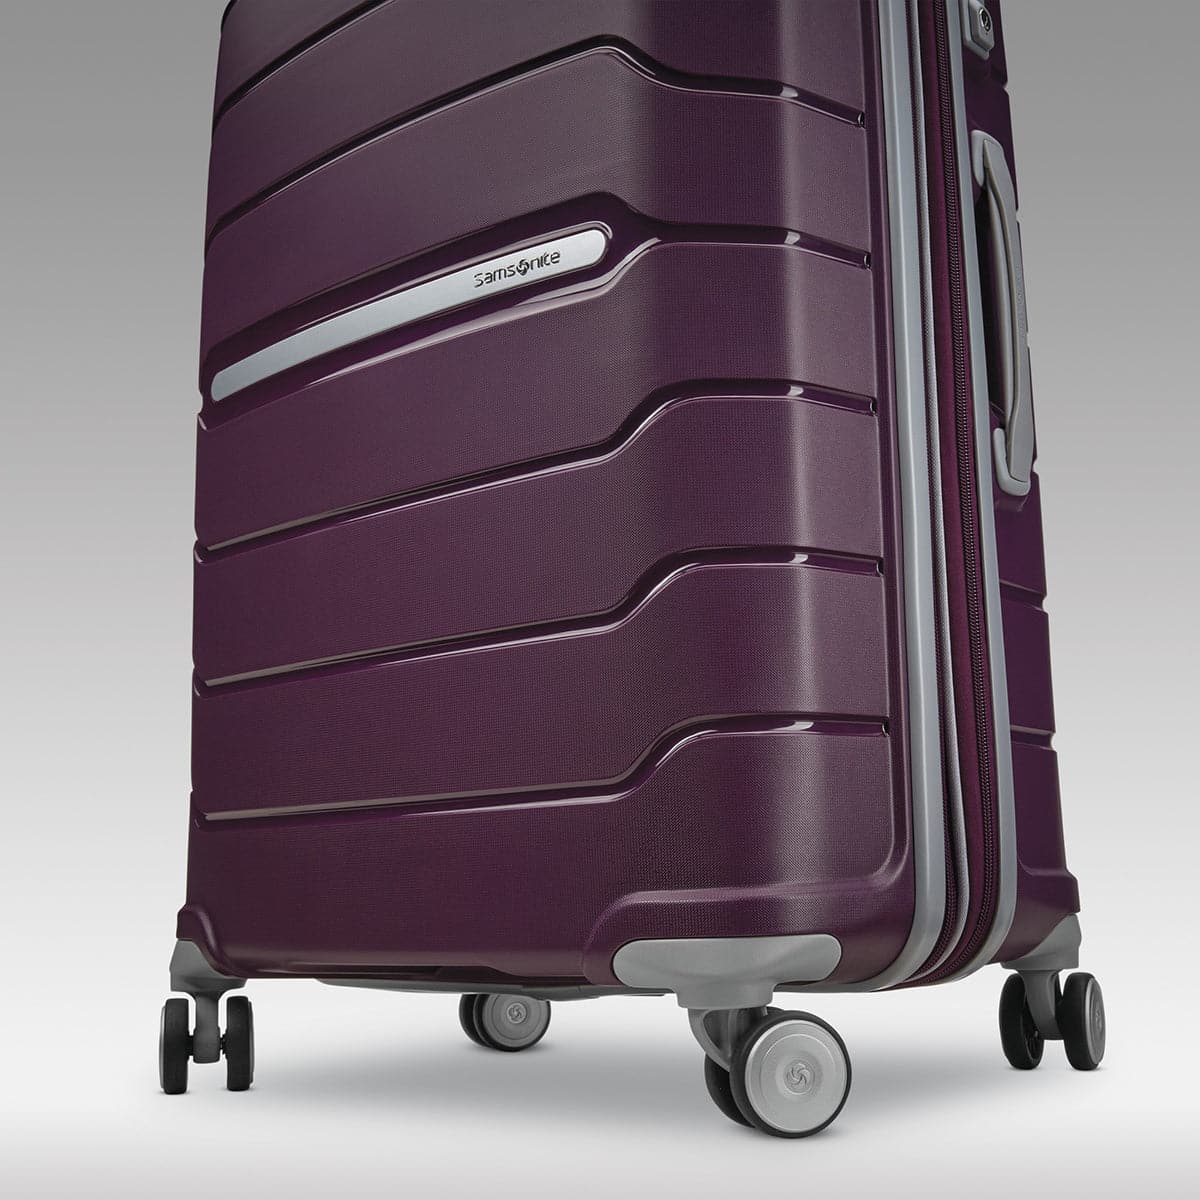 Samsonite Freeform 28" Large Hardside Spinner Luggage